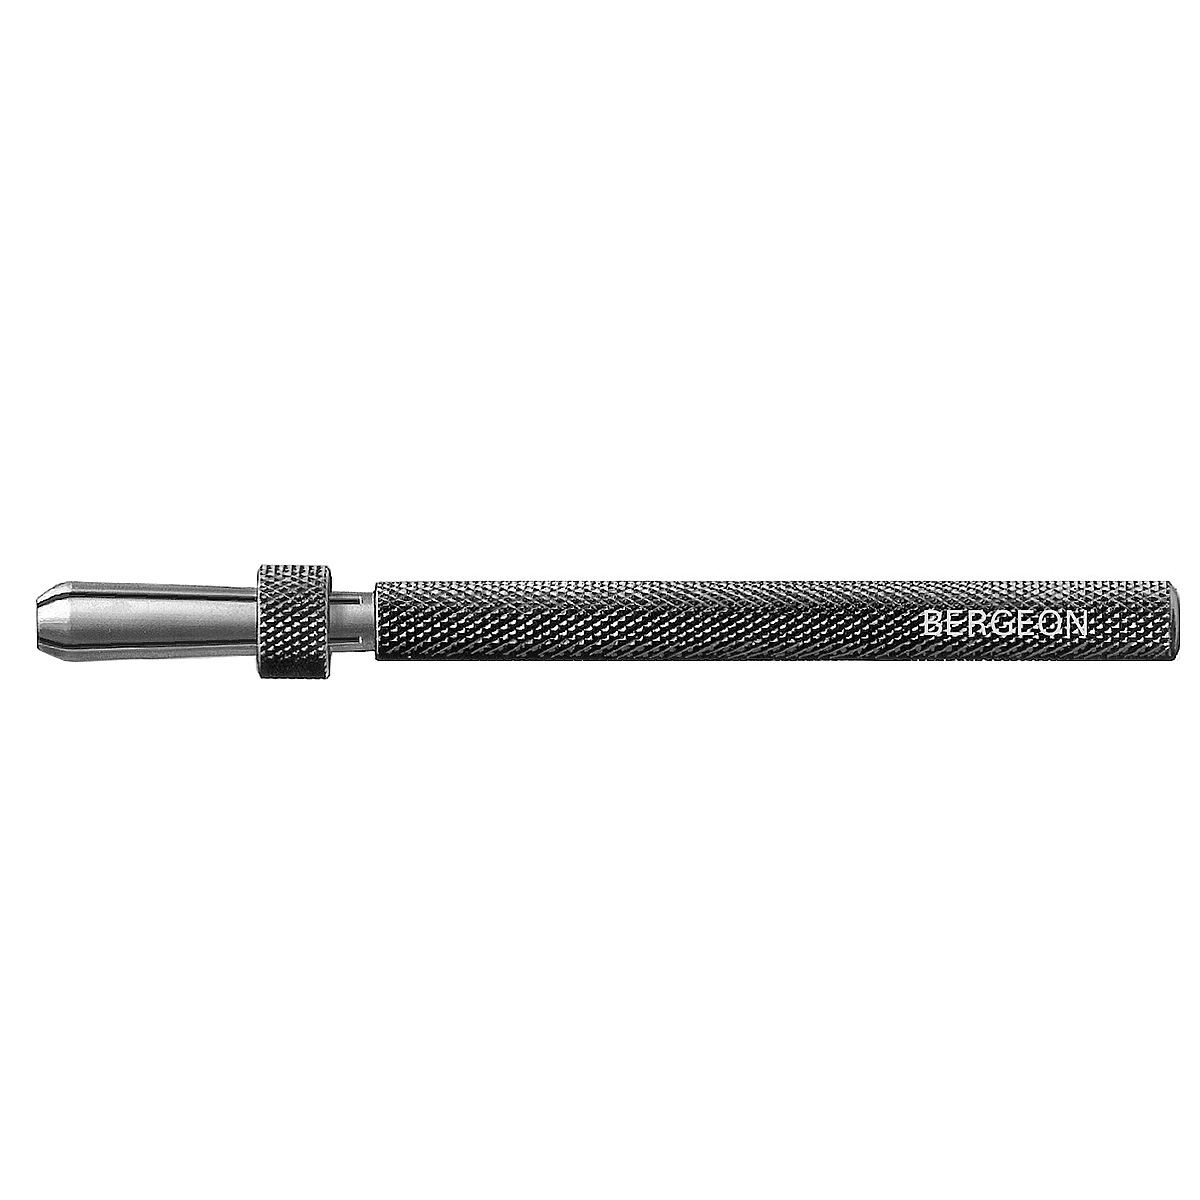 Bergeon 30432 pennehouder met schuifring, klembereik 0 - 1,5 mm, lengte 110 mm